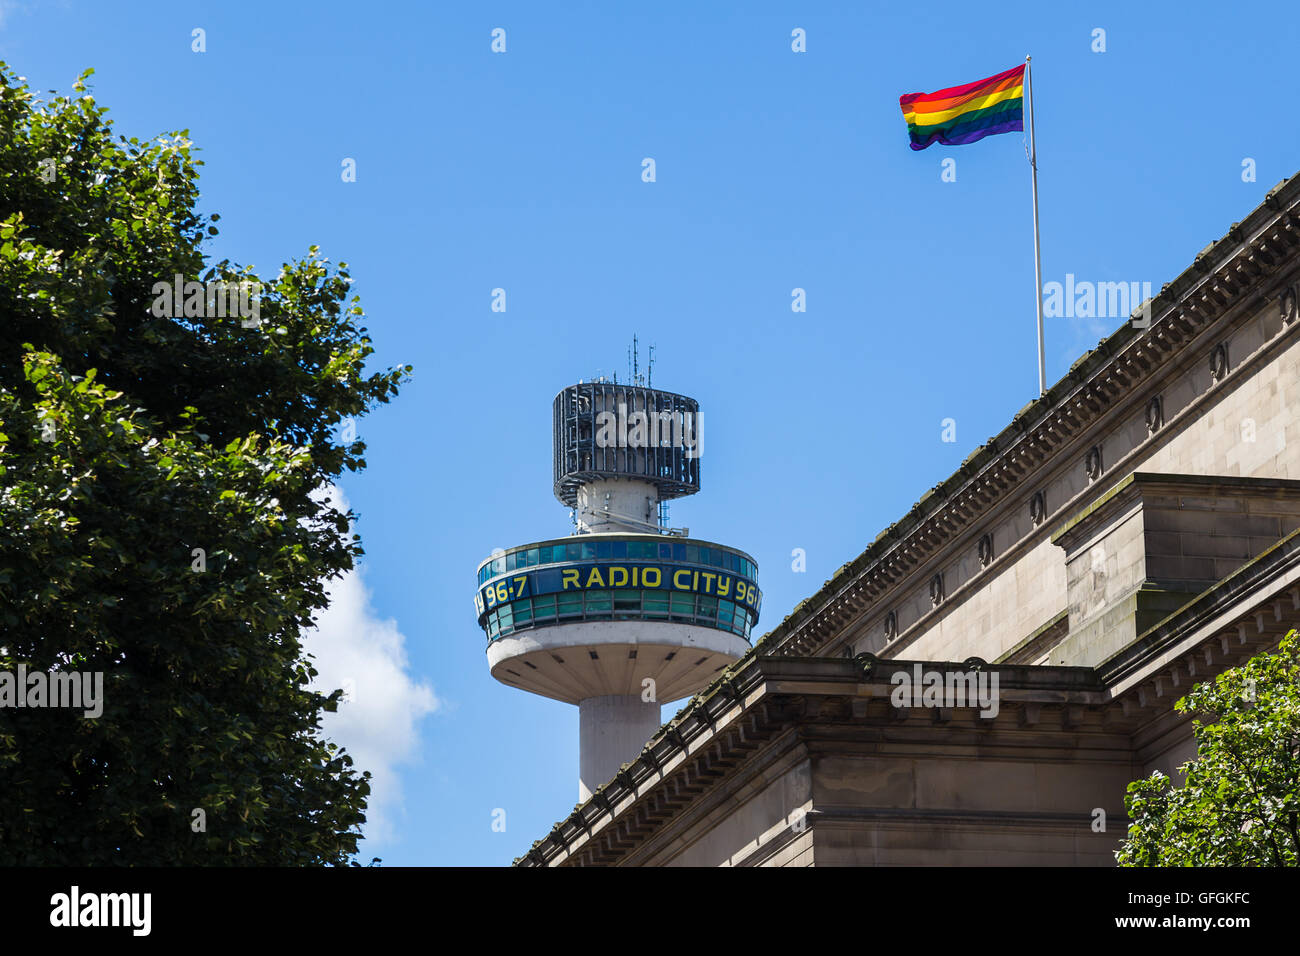 Regenbogenflagge über dem Radio City-Turm an der Liverpool Pride Parade gesehen. Stockfoto